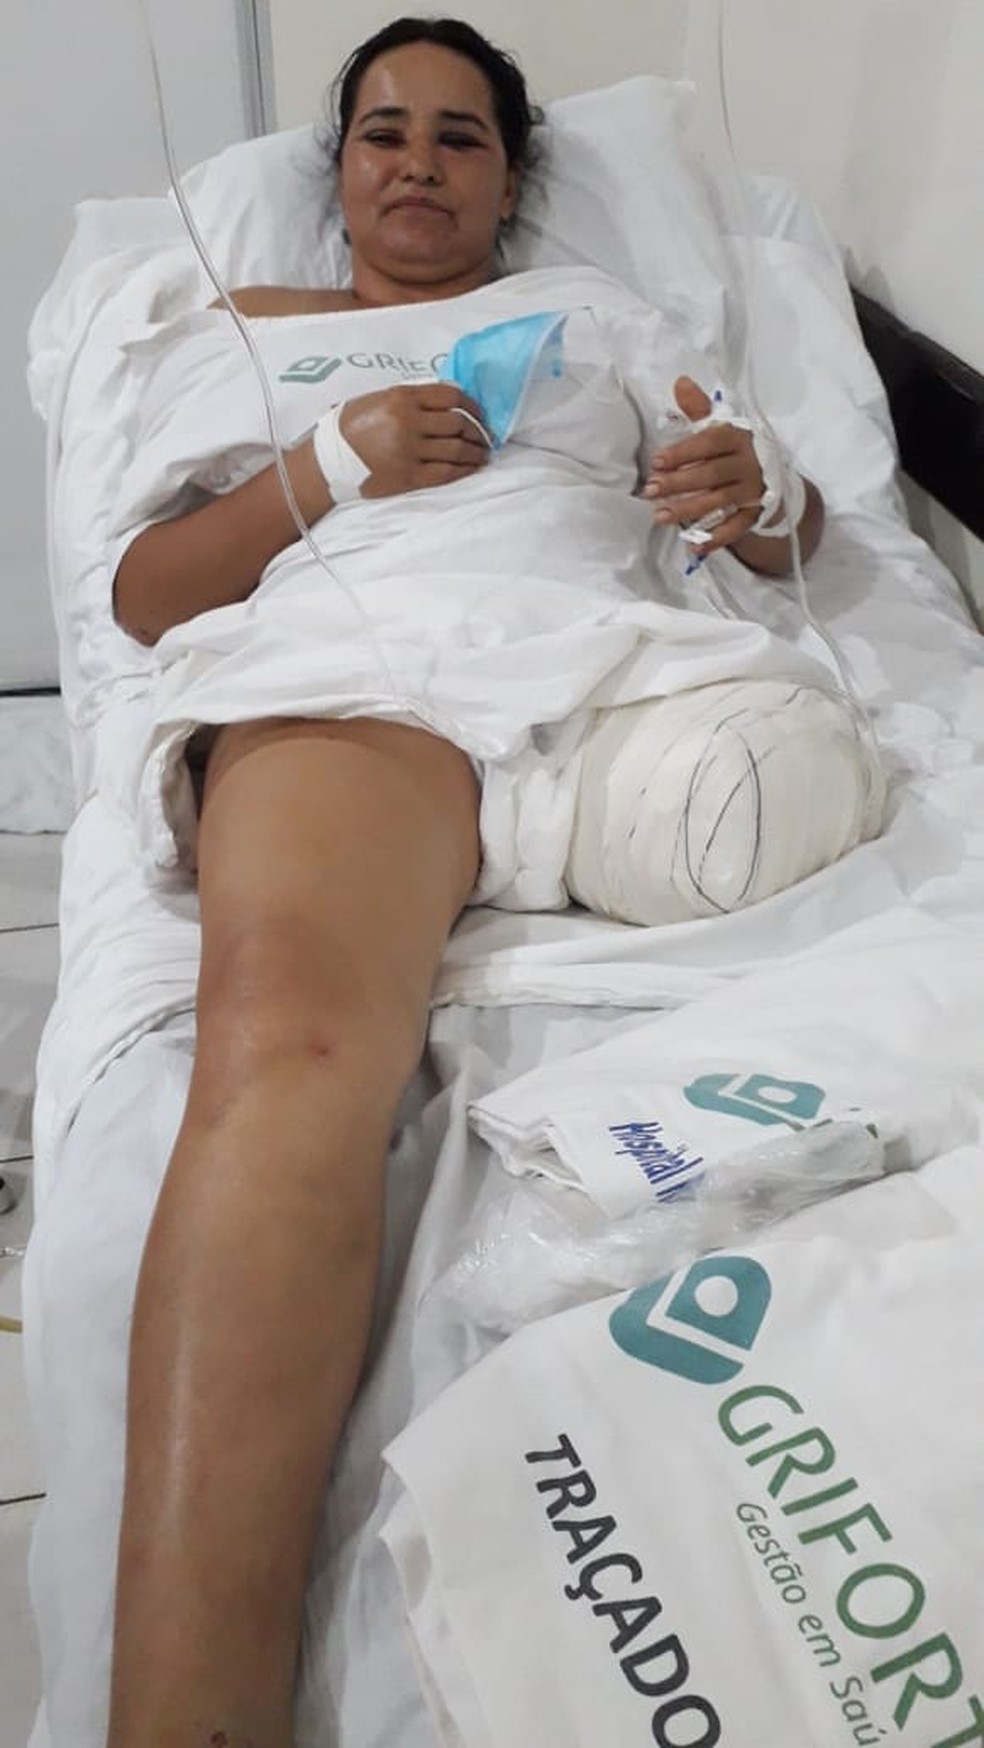  Edna Souza Ianzoni teve a perna amputada após acidente — Foto: Arquivo pessoal